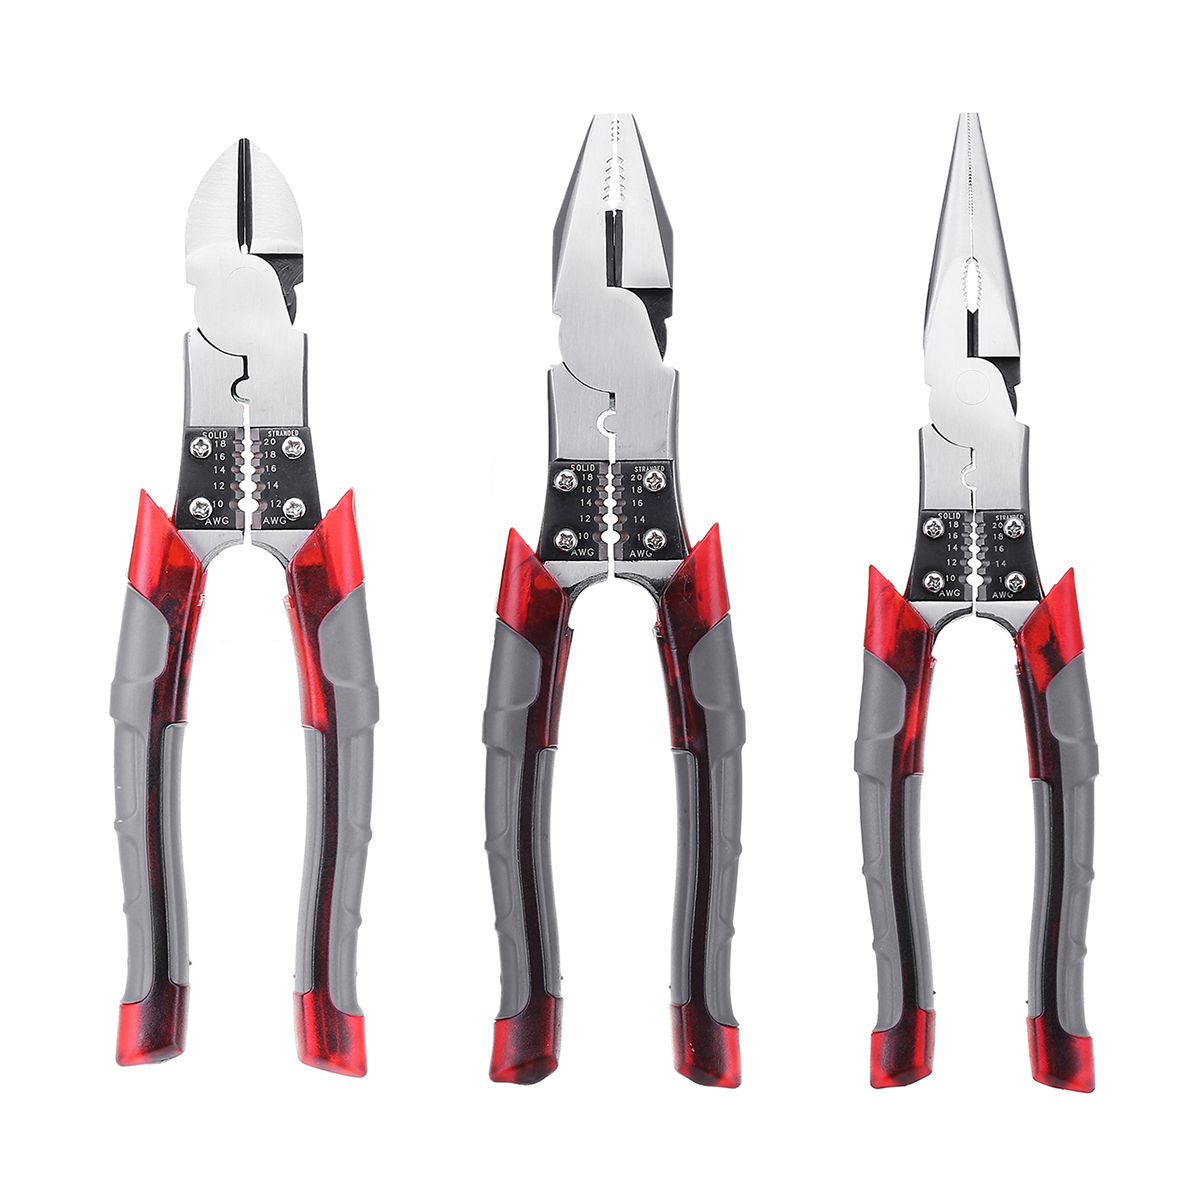 8-inch-Multifunction-Steel-Pliers-Nipper-Pliers-Diagonal-Pliers-Cutting-Pliers-Wire-Cutters-Hand-Too-1295852